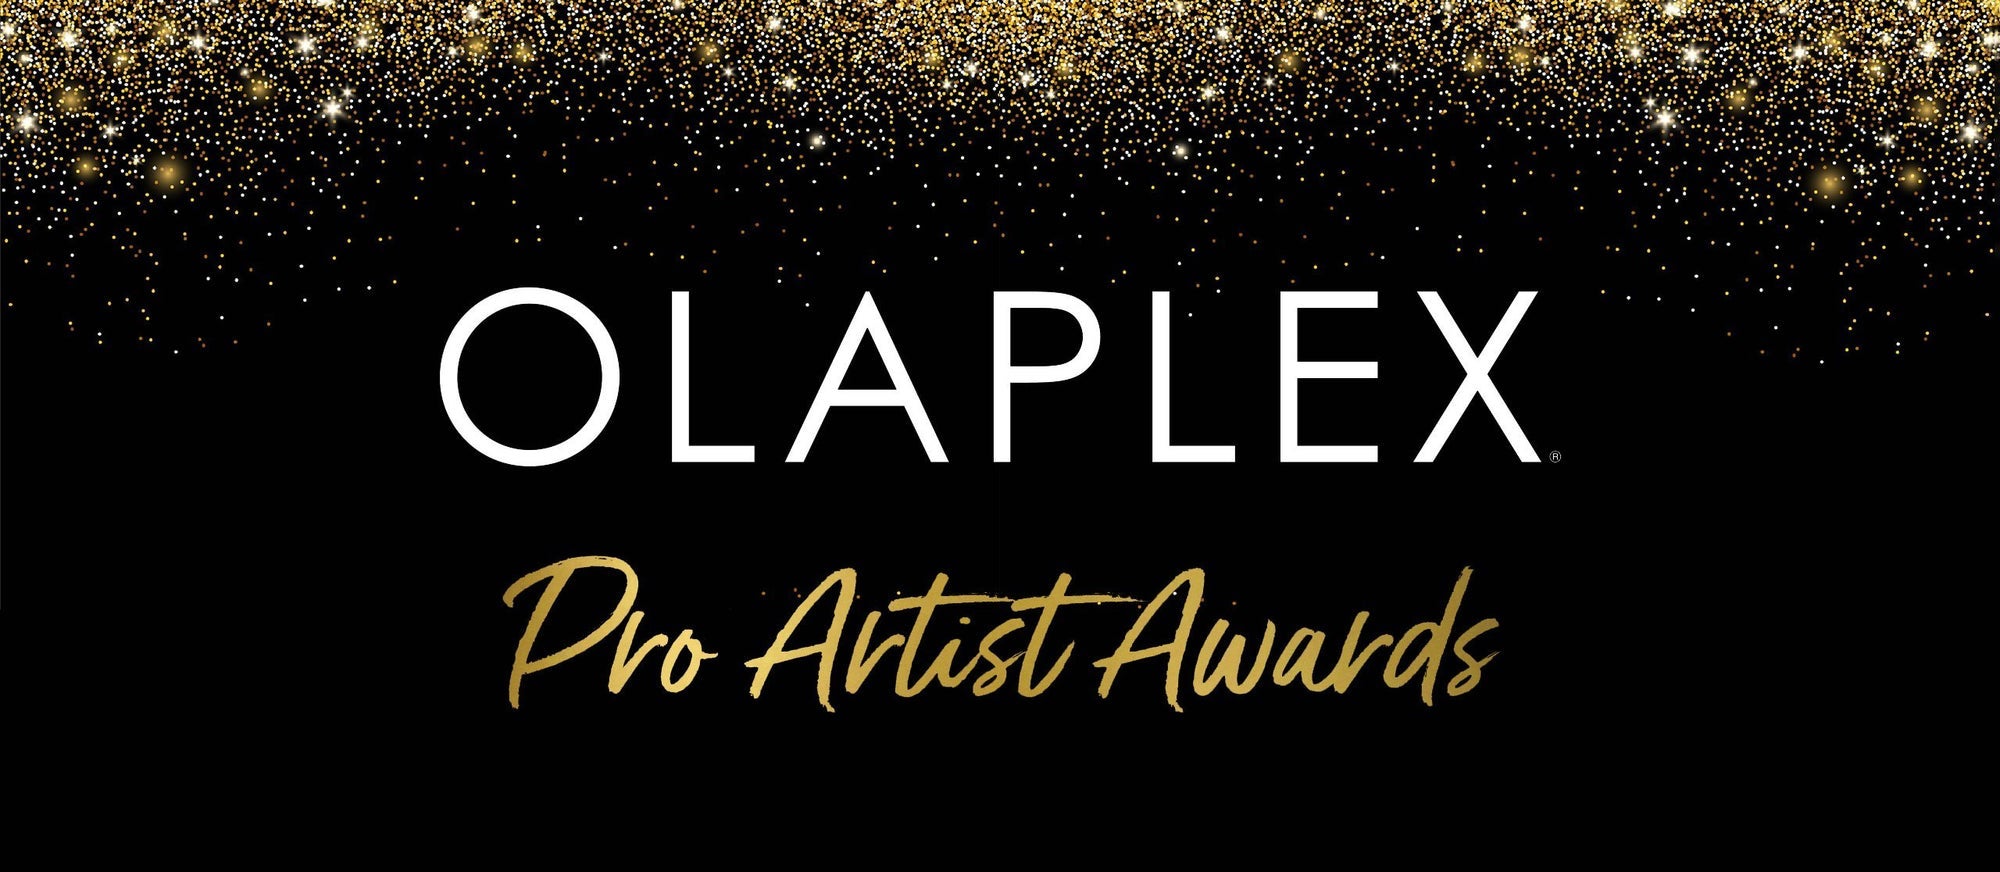 OLAPLEX - Pro Artist Awards Categories